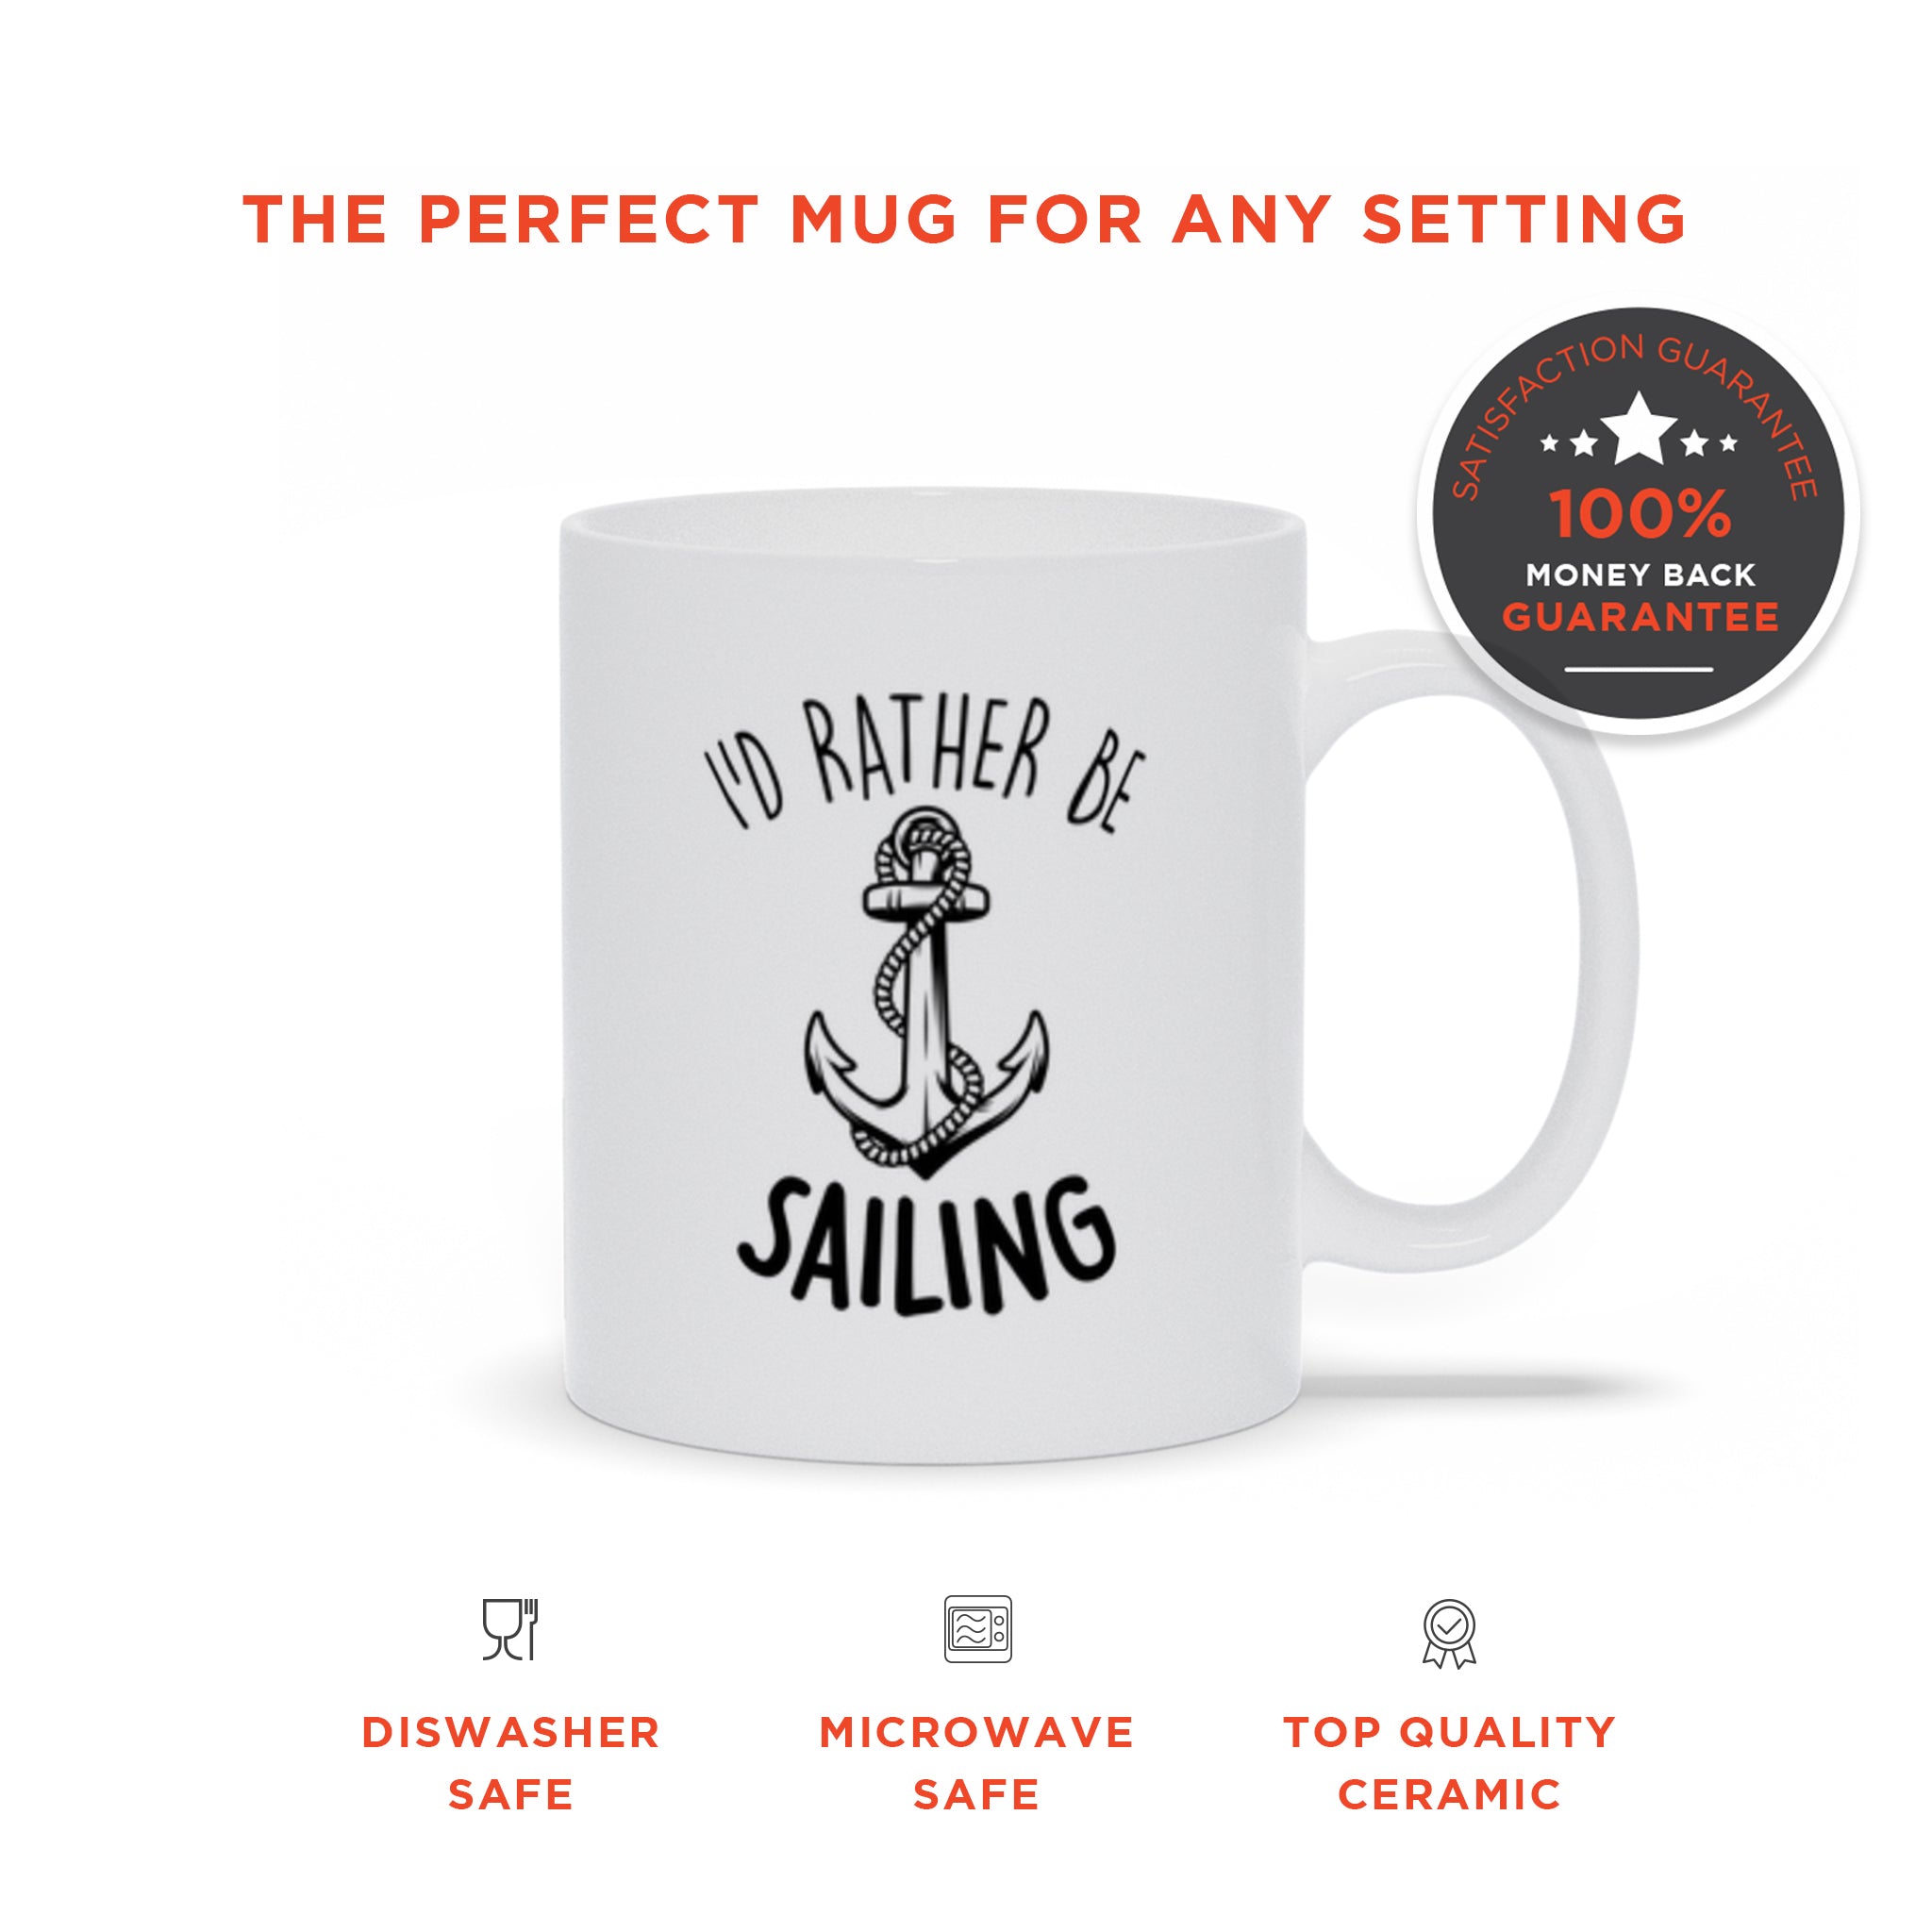 I'd Rather Be Sailing Ceramic Mug